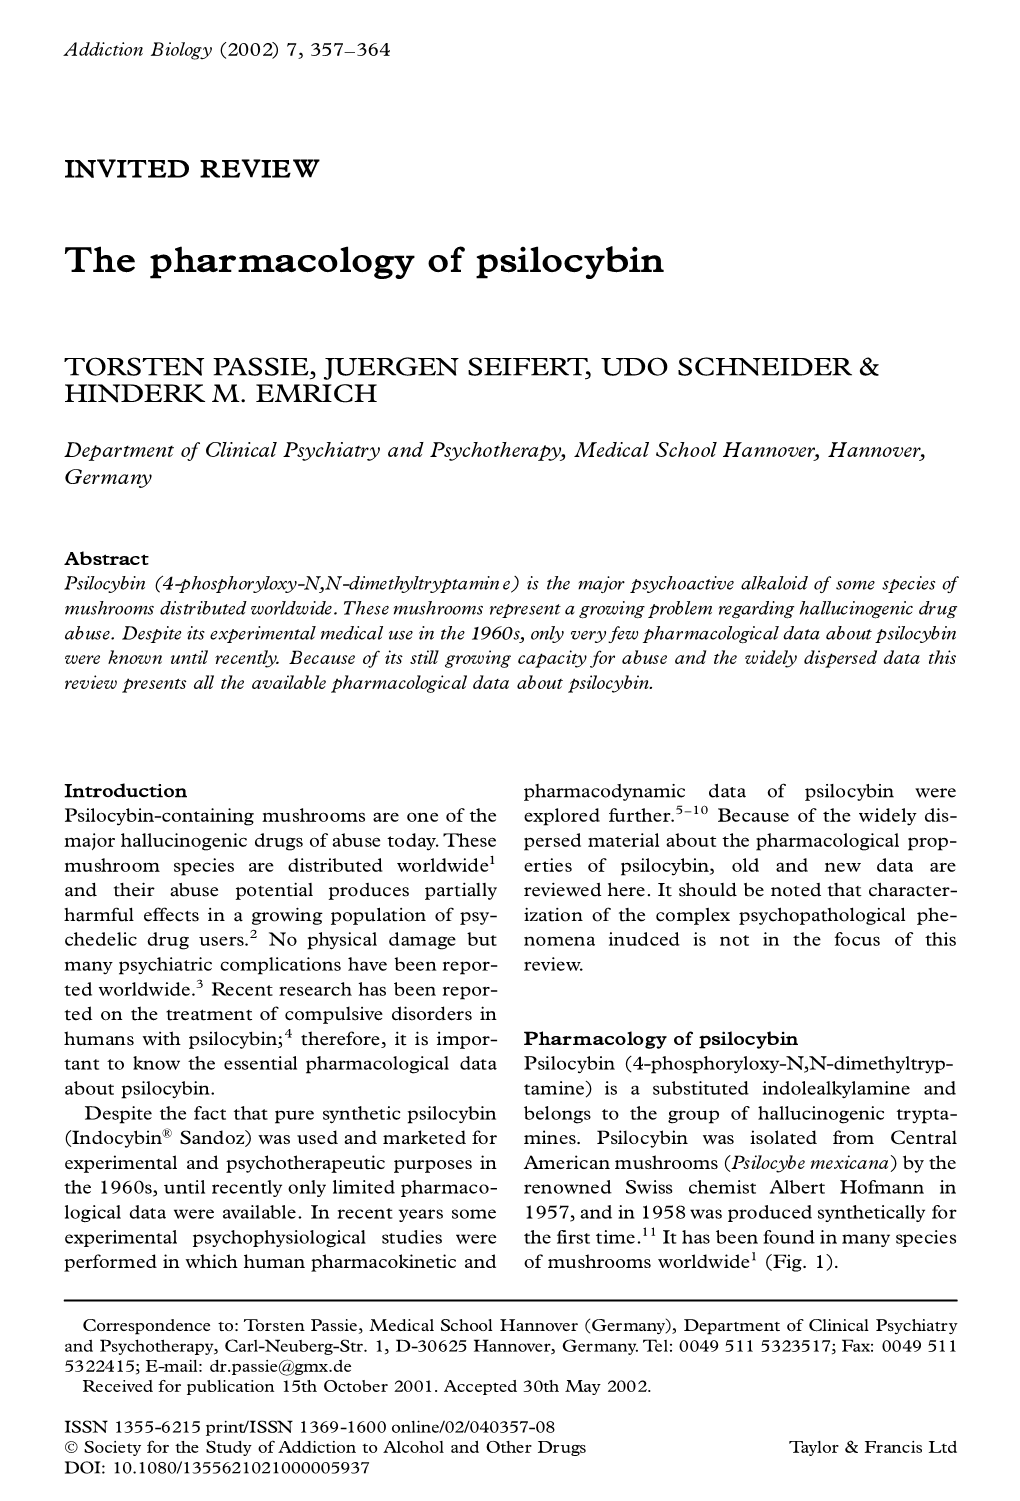 The Pharmacology of Psilocybin